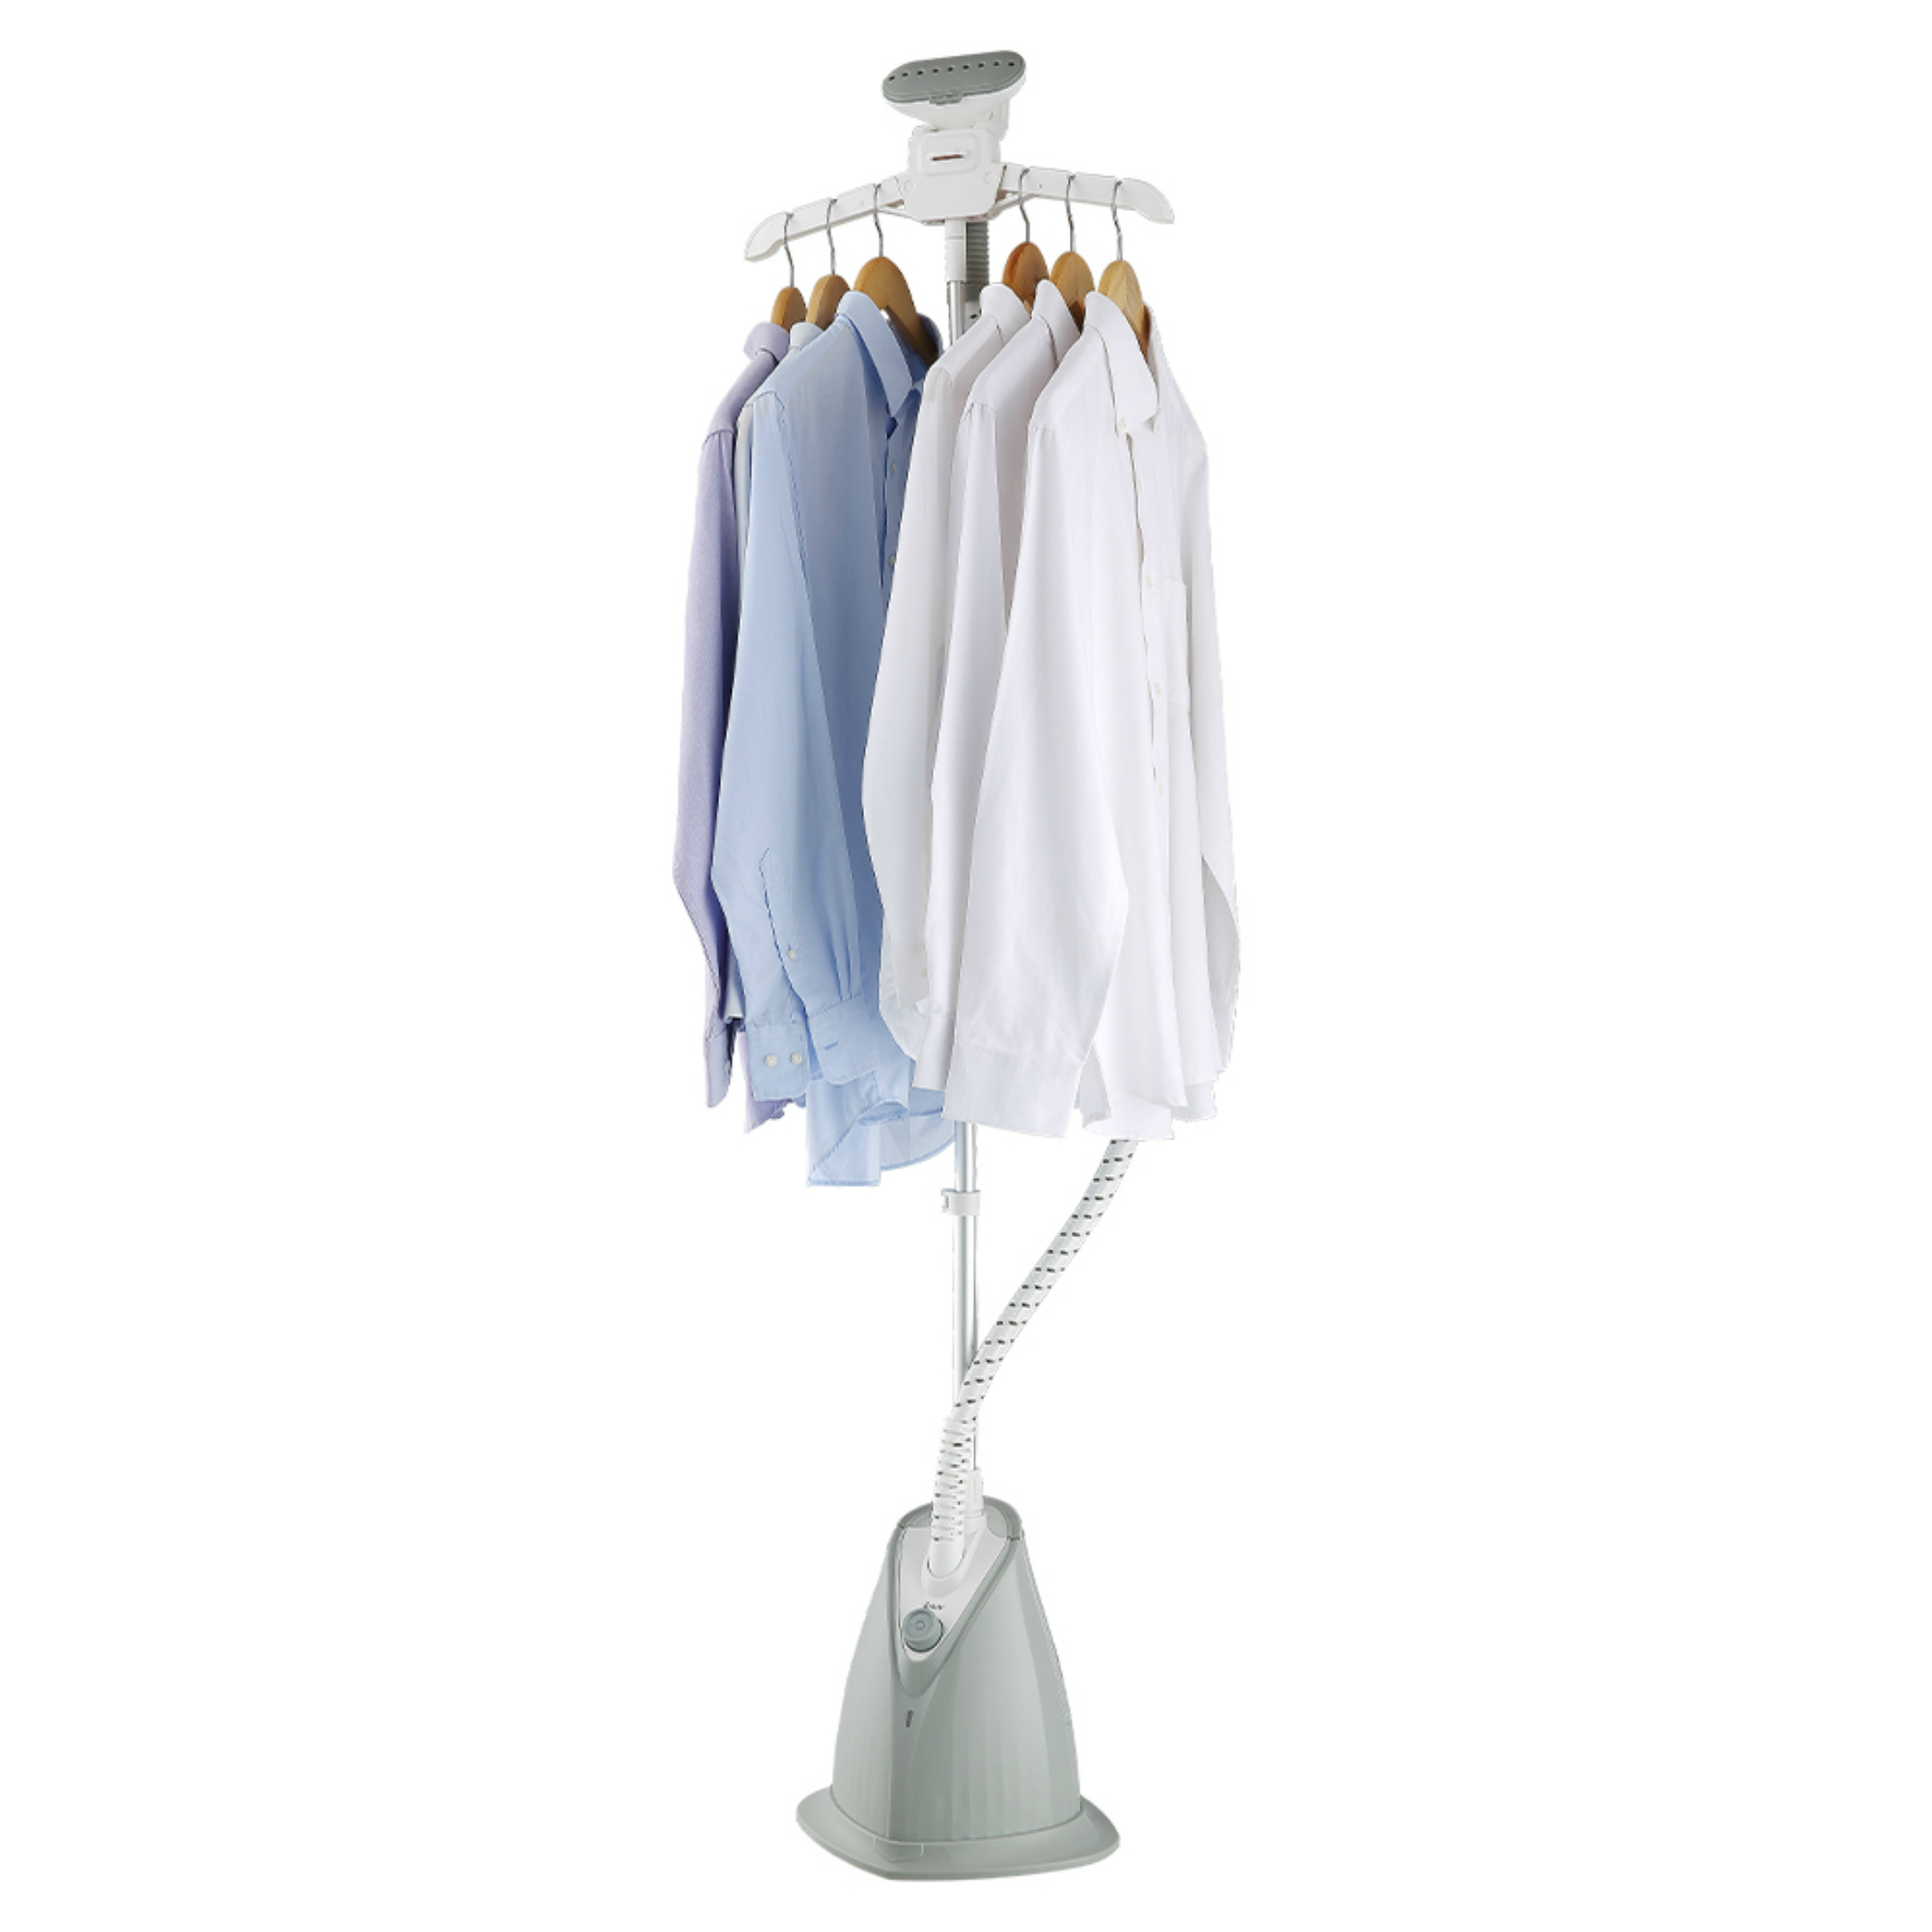 Salav Performance Series Garment Steamer with 360 Swivel Hanger in Gray - image 5 of 11